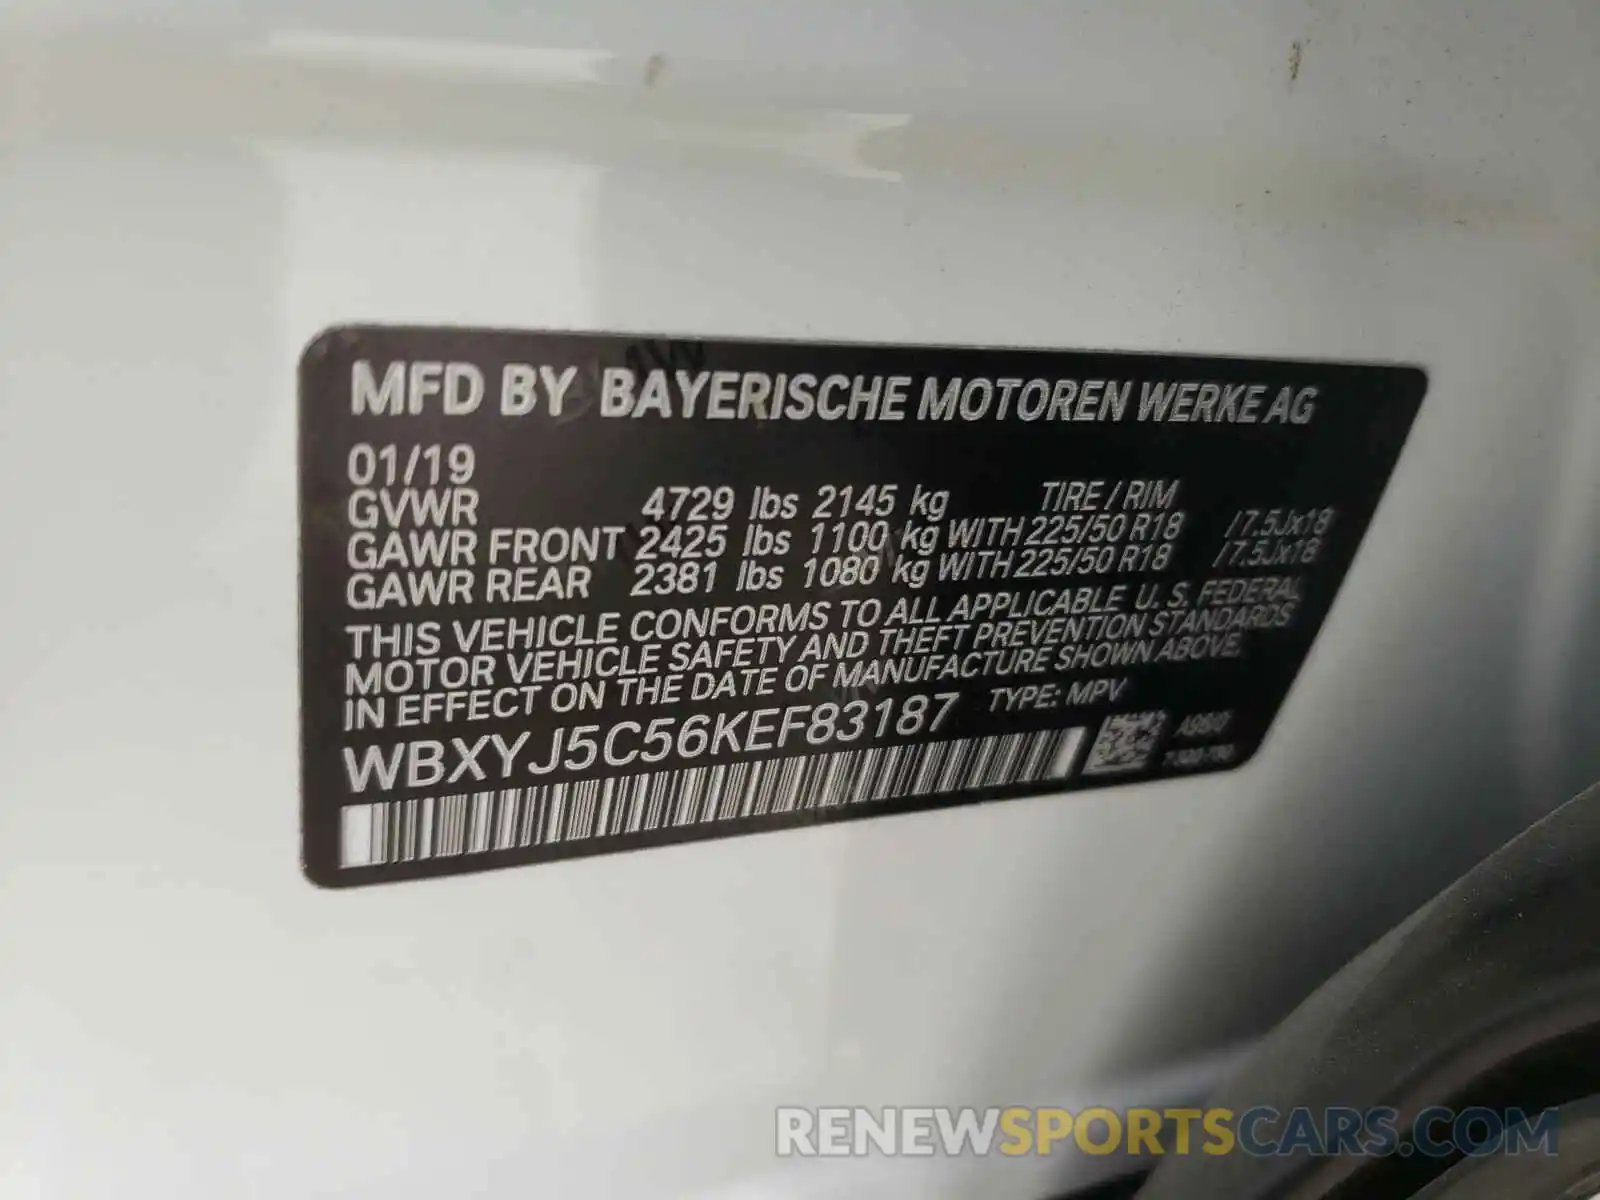 10 Photograph of a damaged car WBXYJ5C56KEF83187 BMW X2 2019